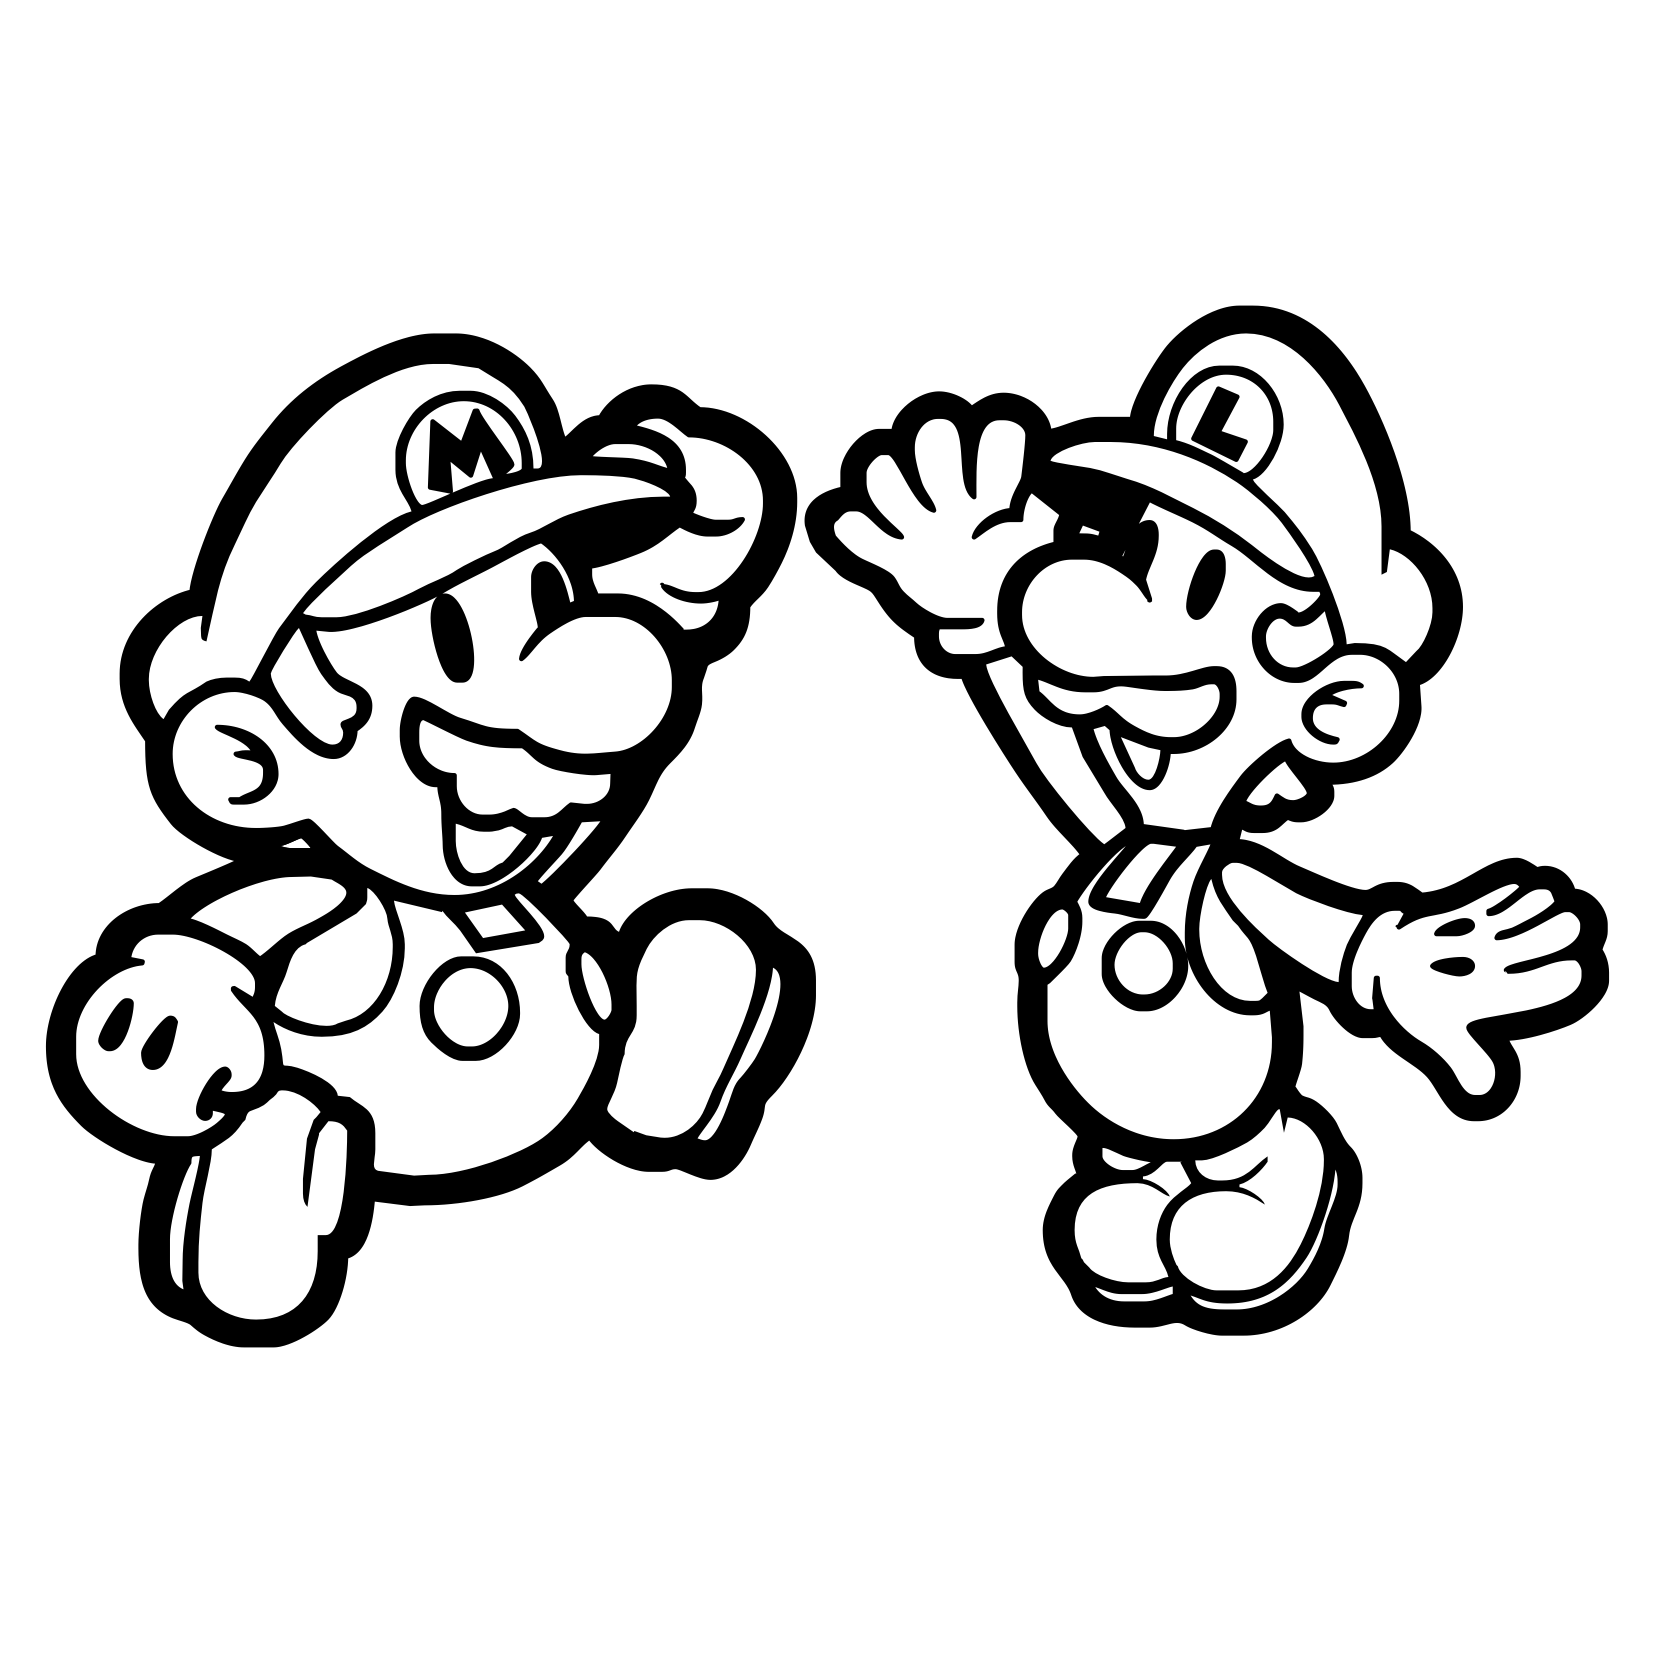 Mario et Luigi tout petits !